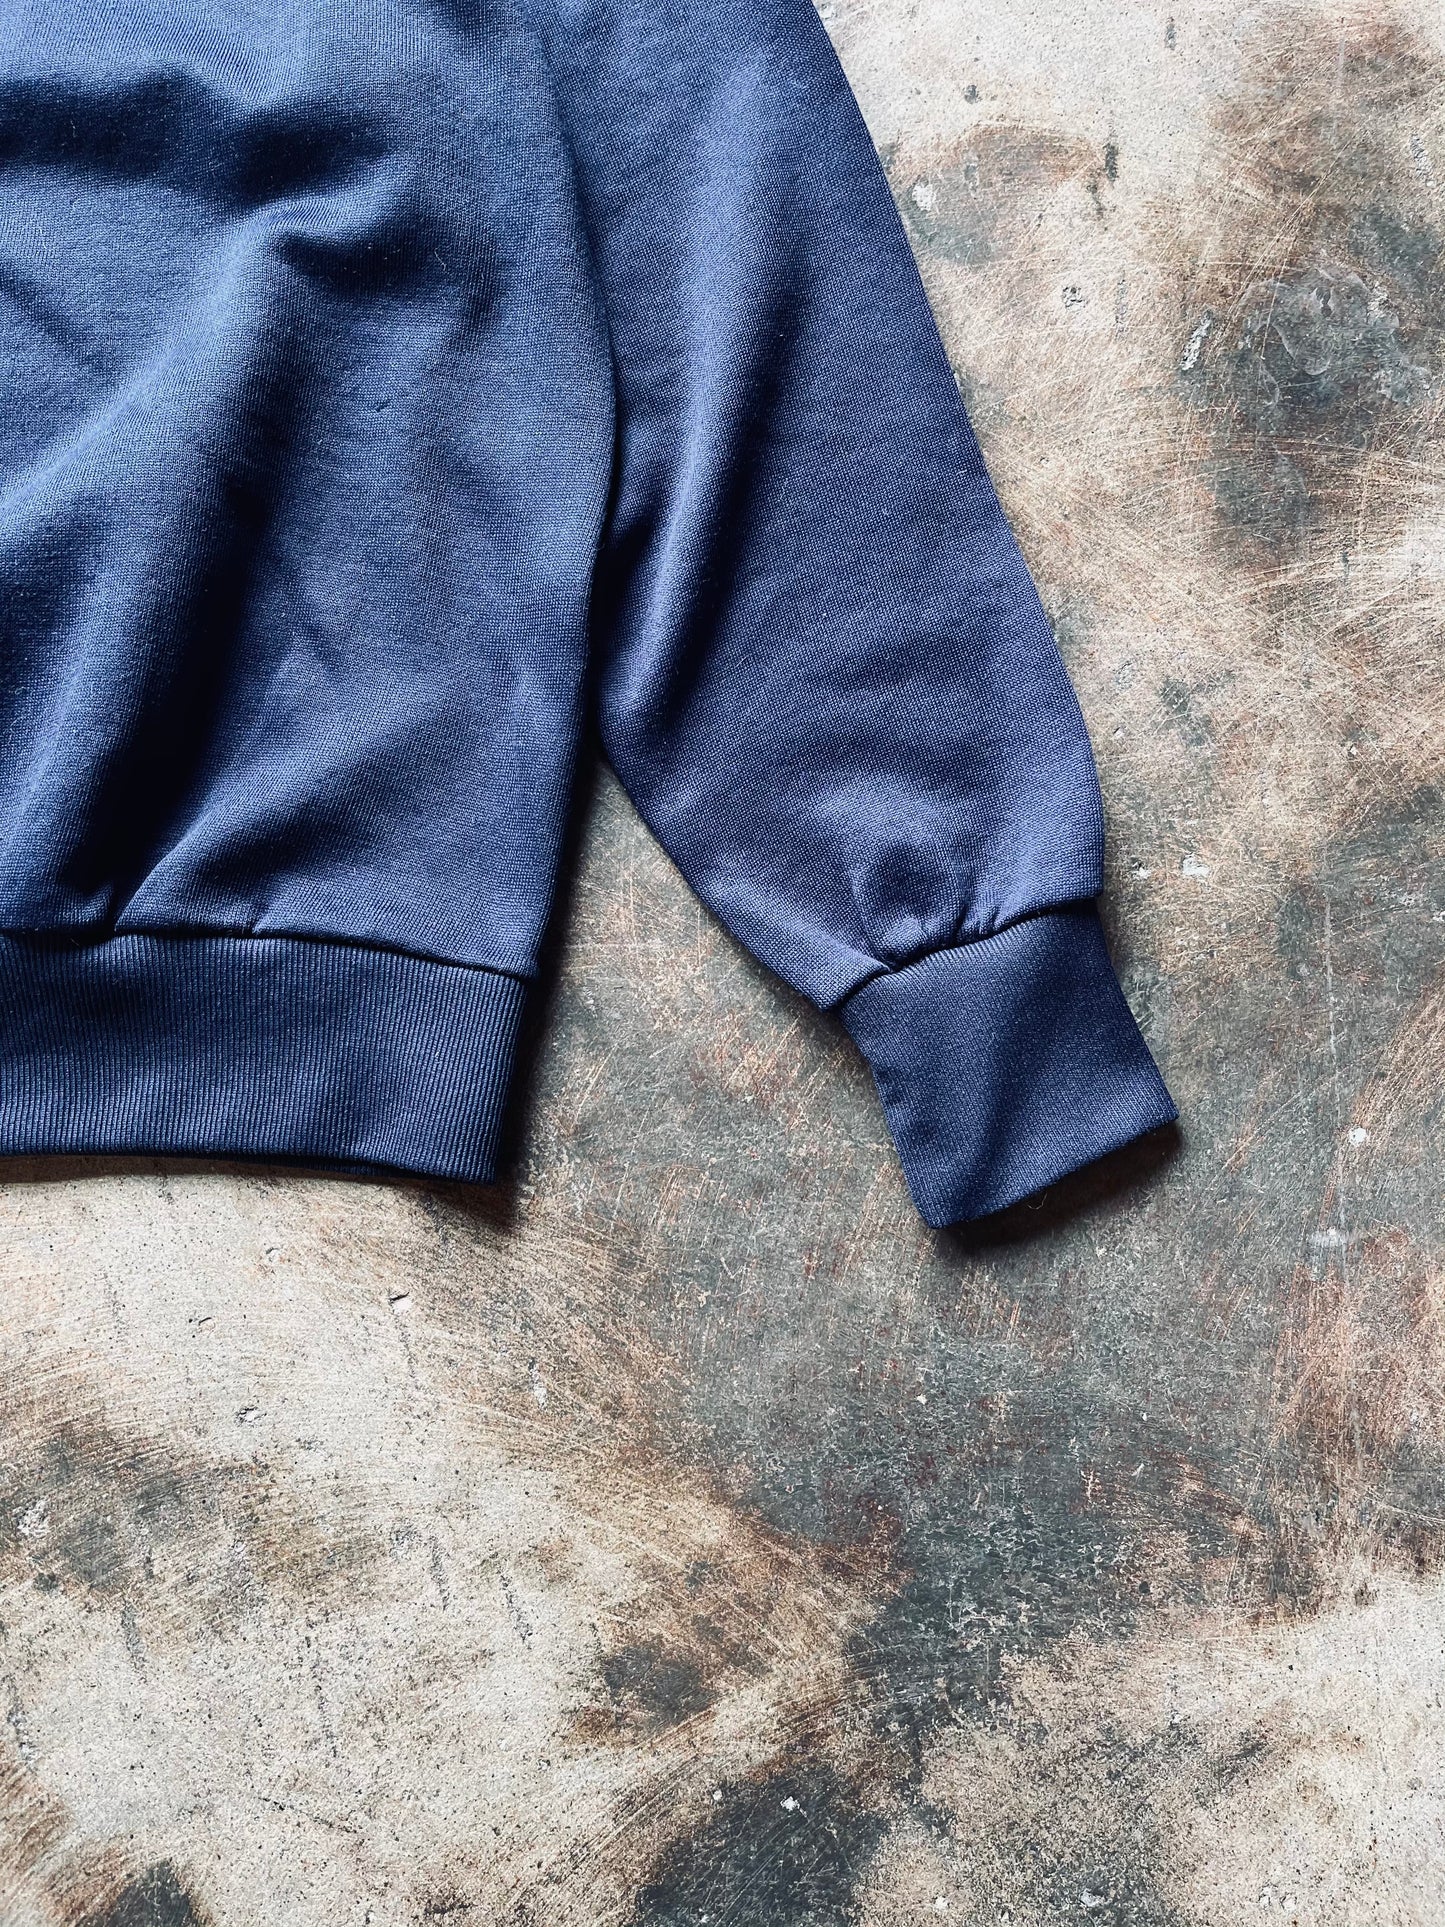 1970s/80s Sportswear Brand Raglan Sleeve Sweatshirt | Medium